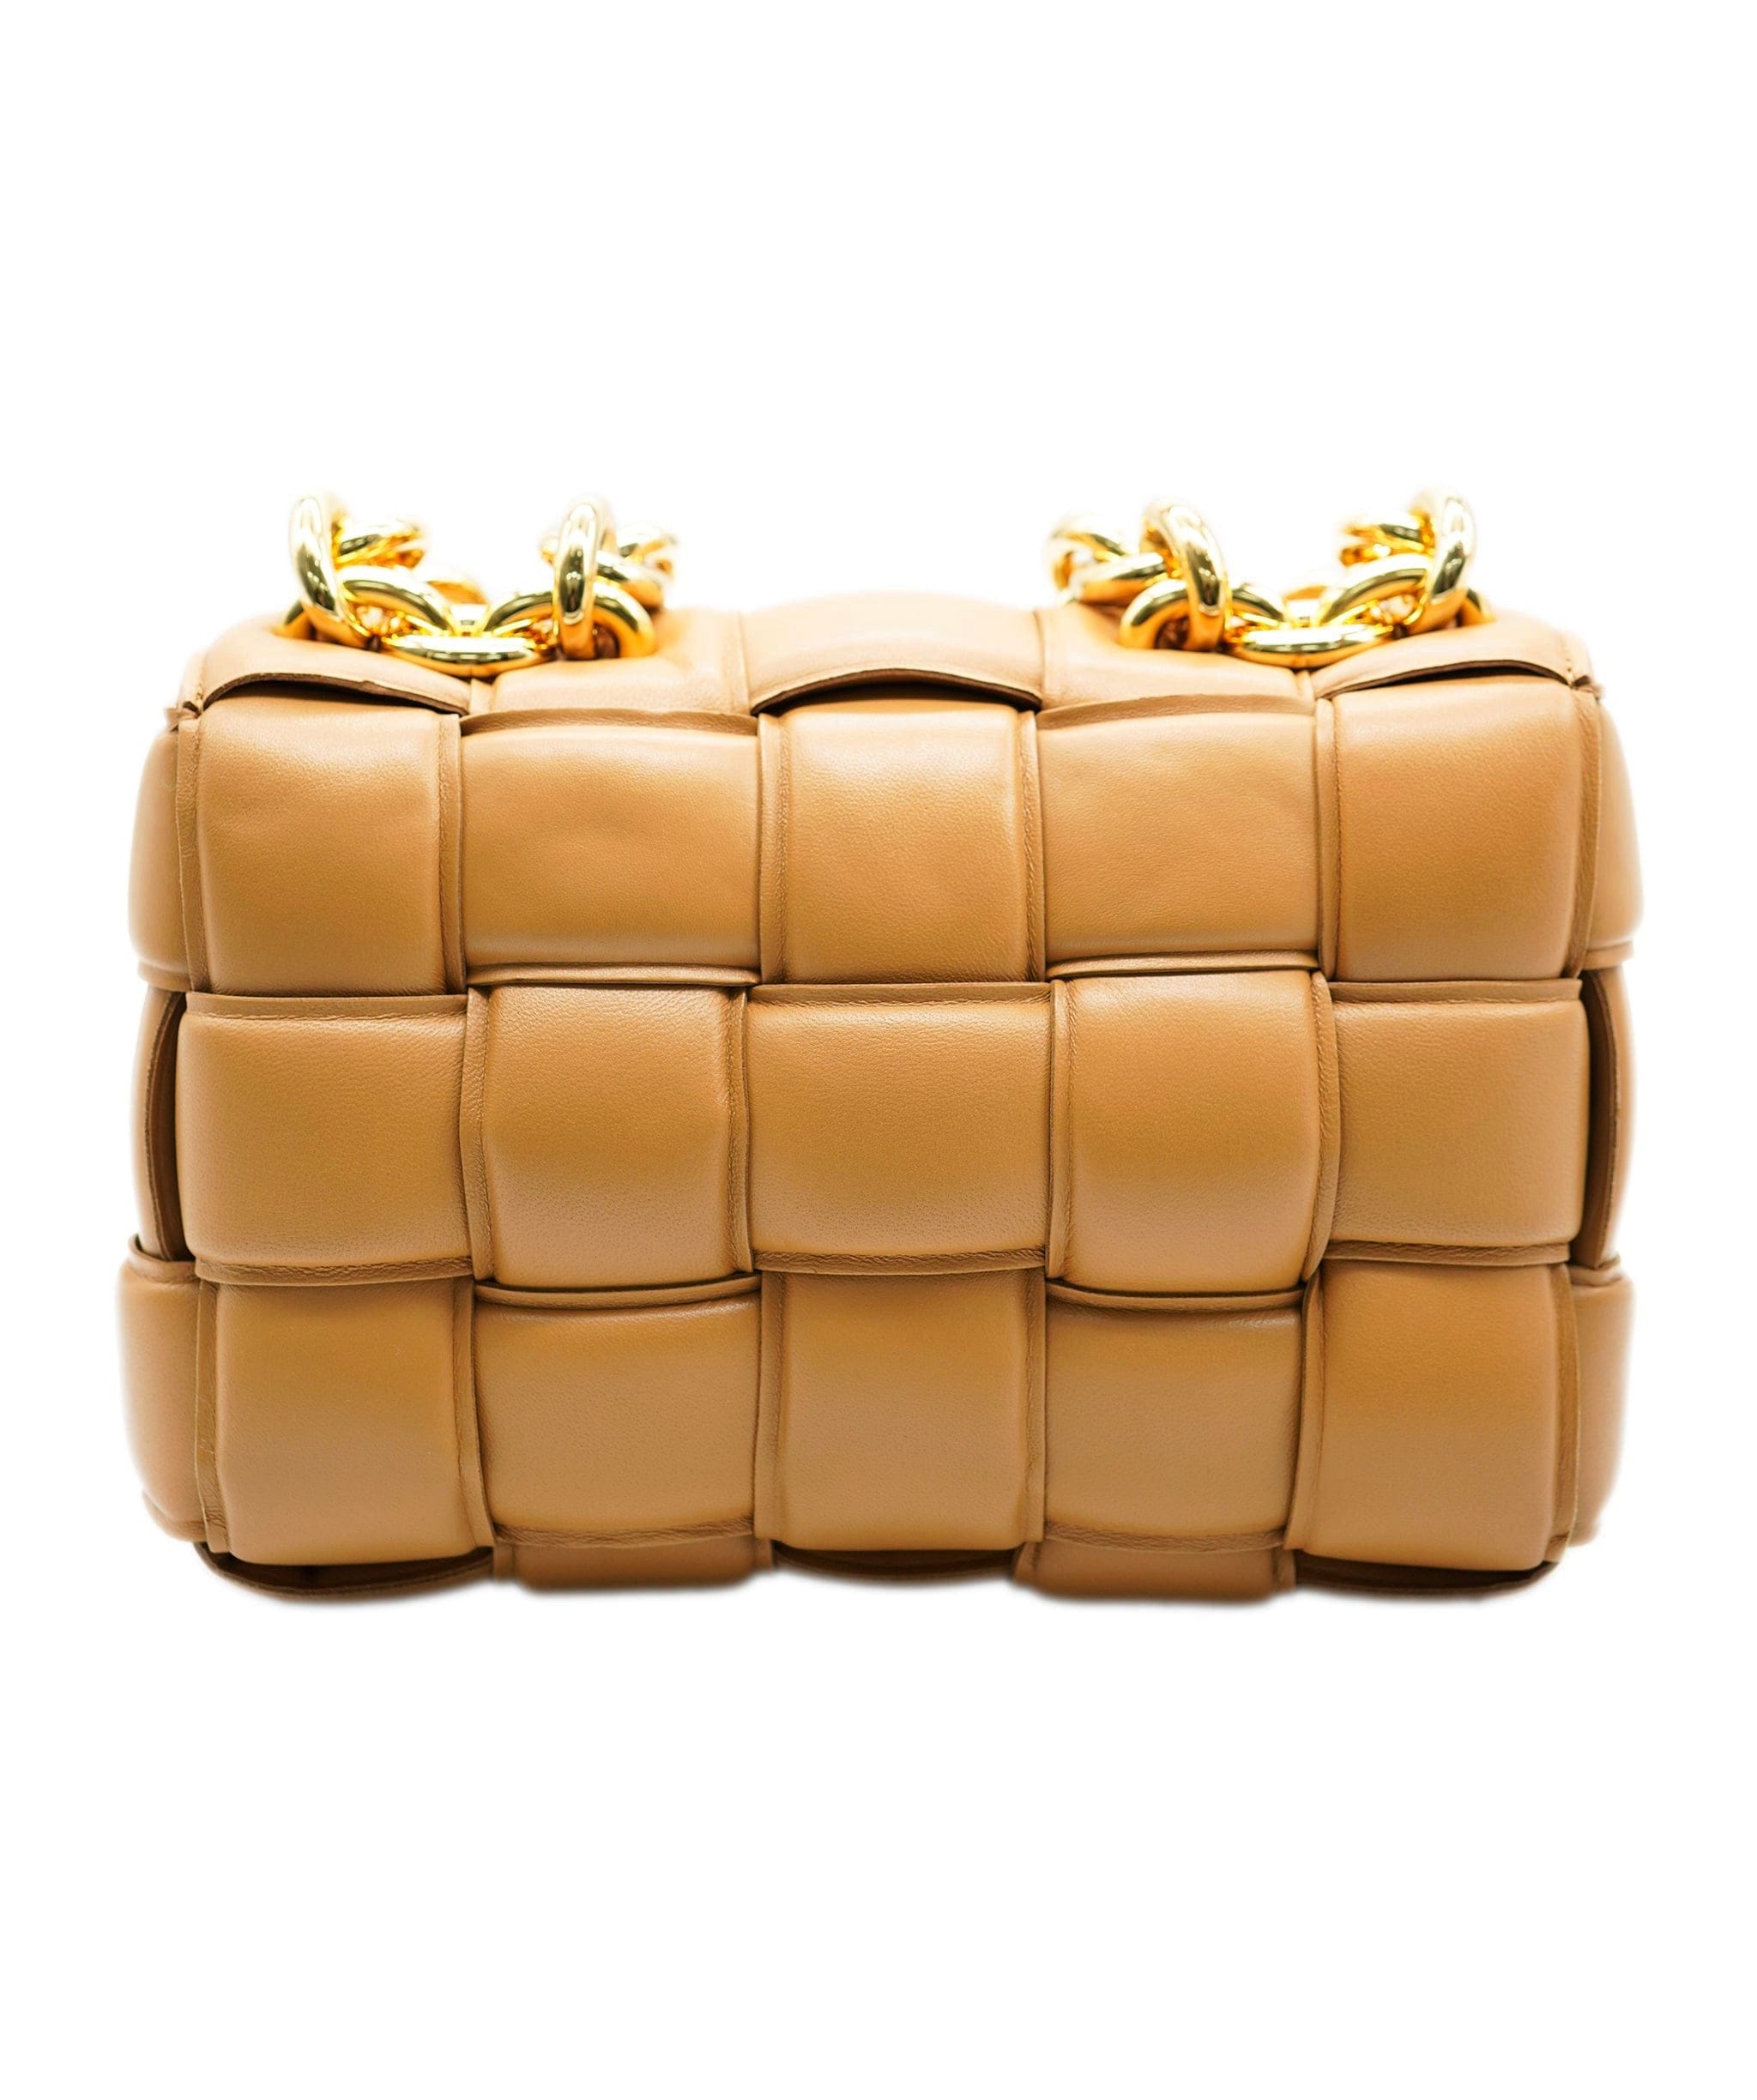 Bottega Bottega chain casette bag gold with GHW - AJC0496